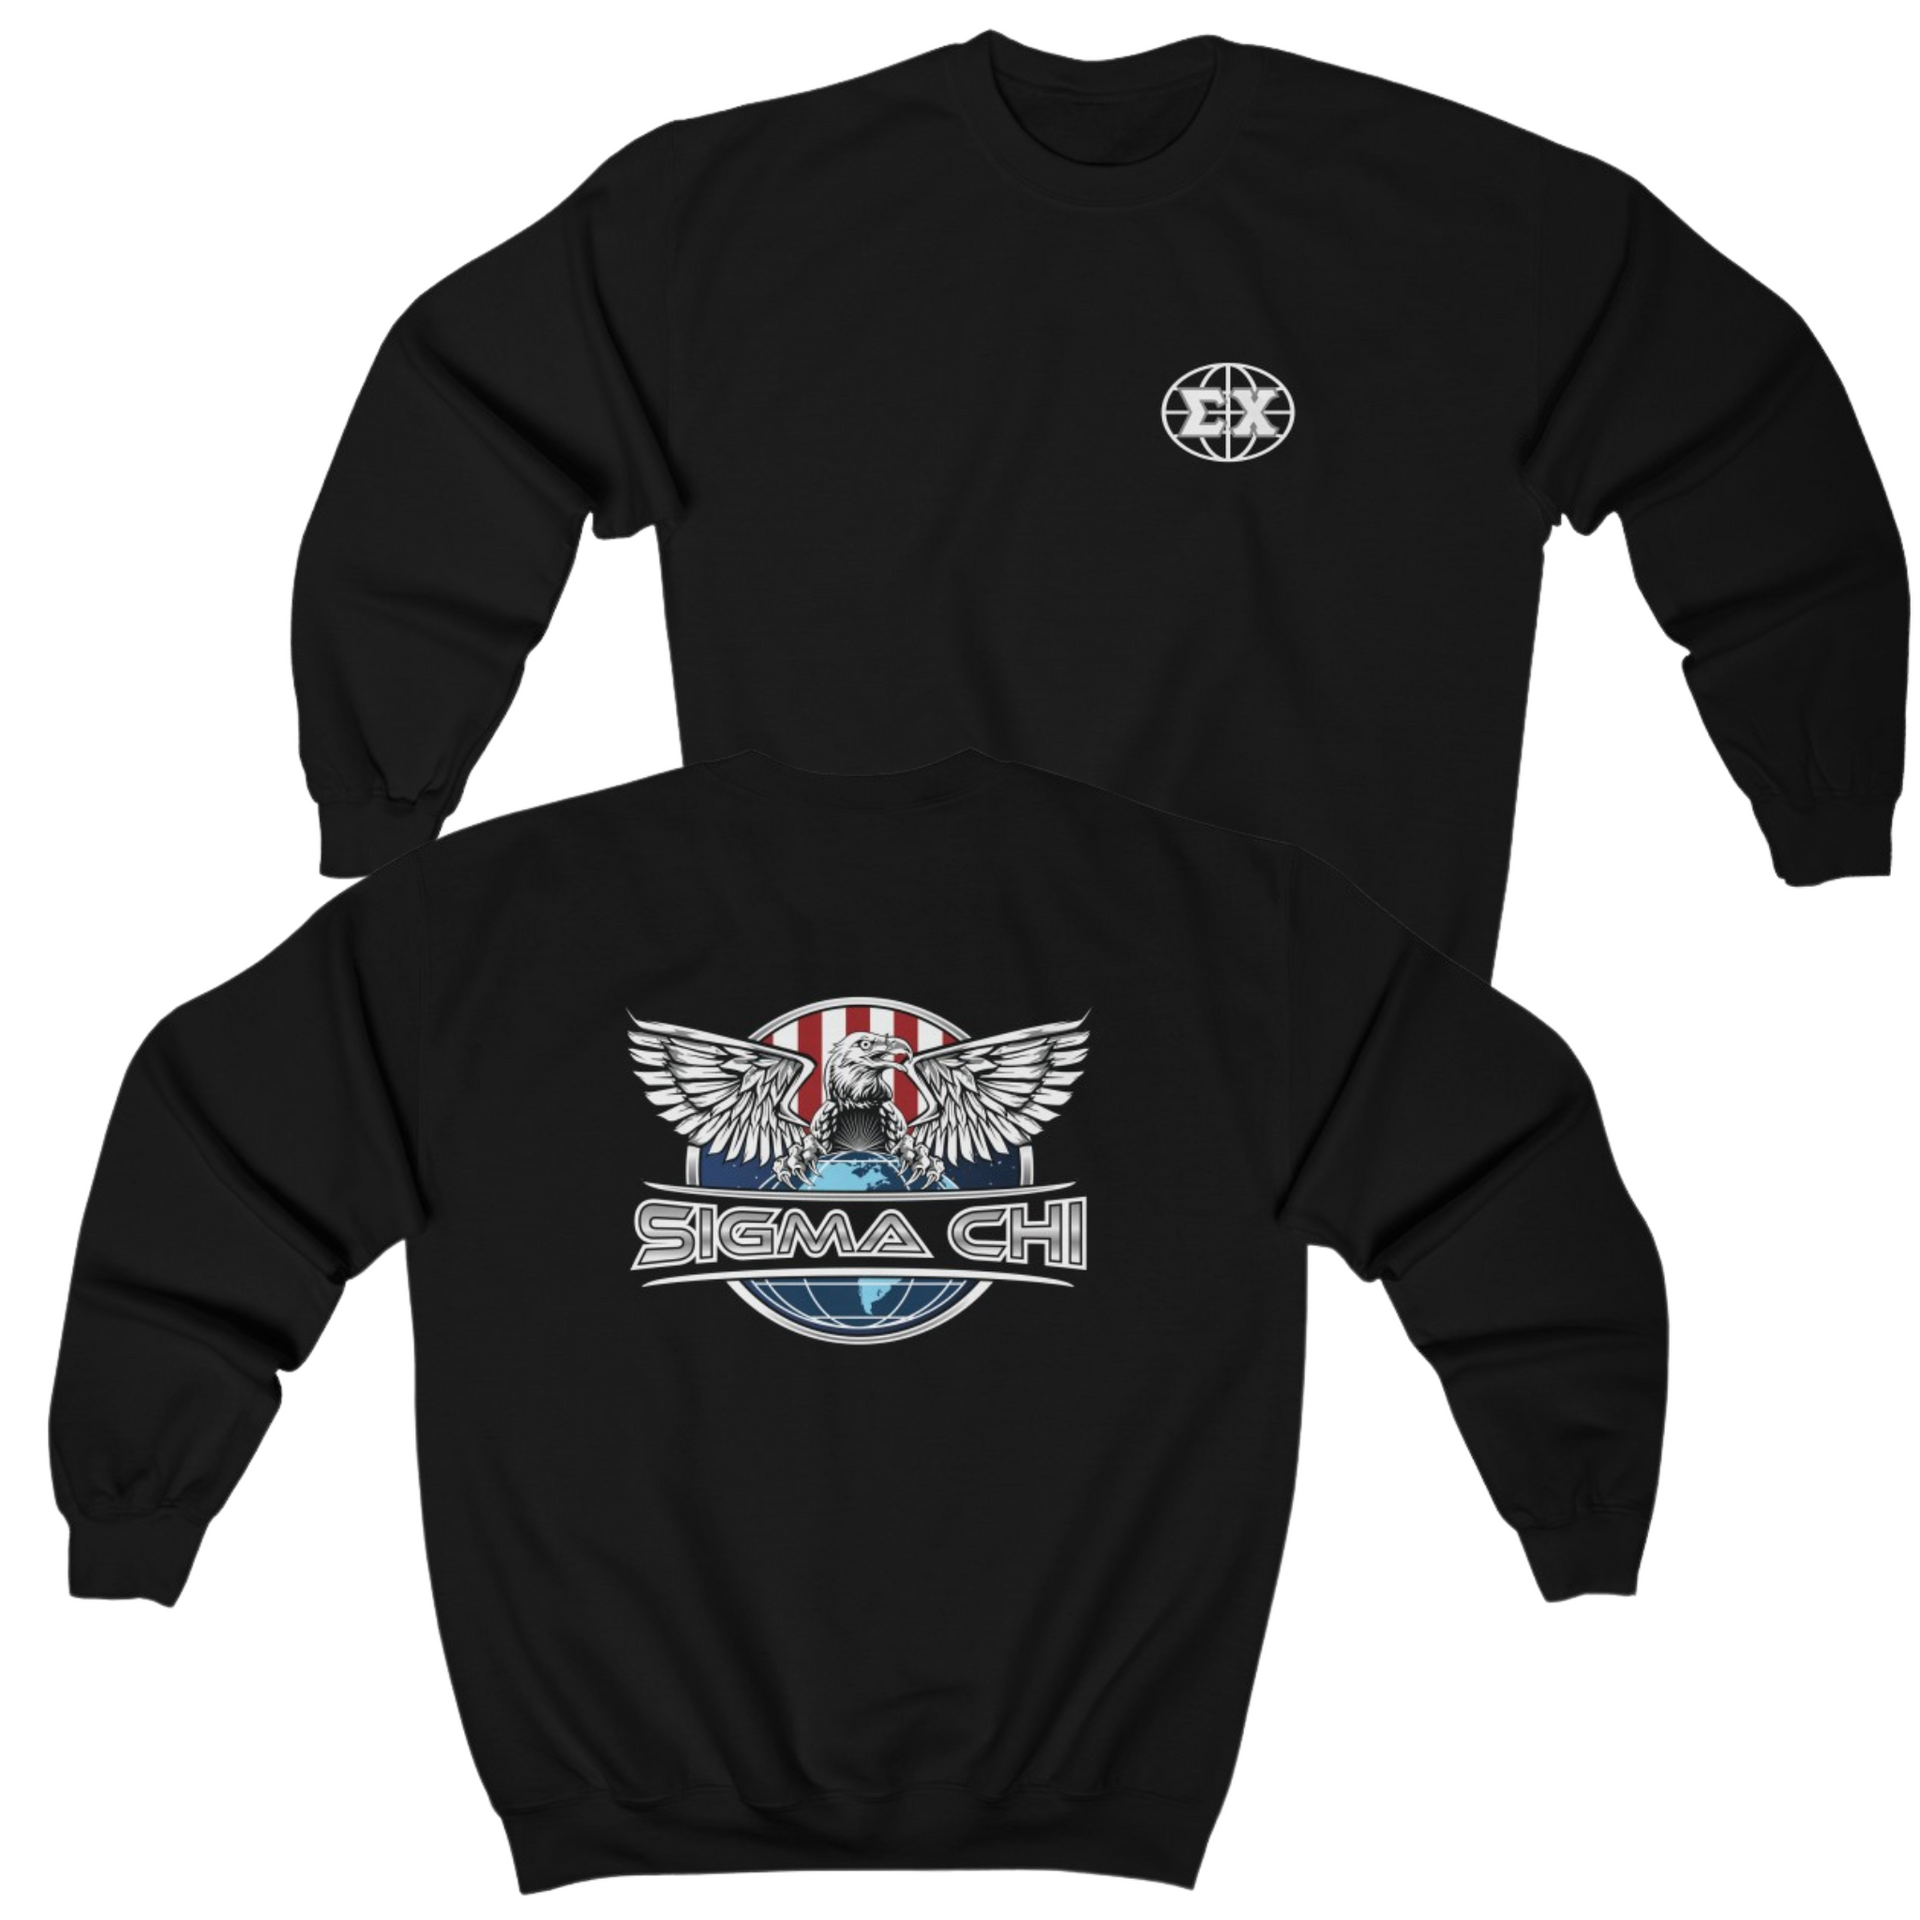 Black Sigma Chi Graphic Crewneck Sweatshirt | The Fraternal Order | Sigma Chi Fraternity Merch House